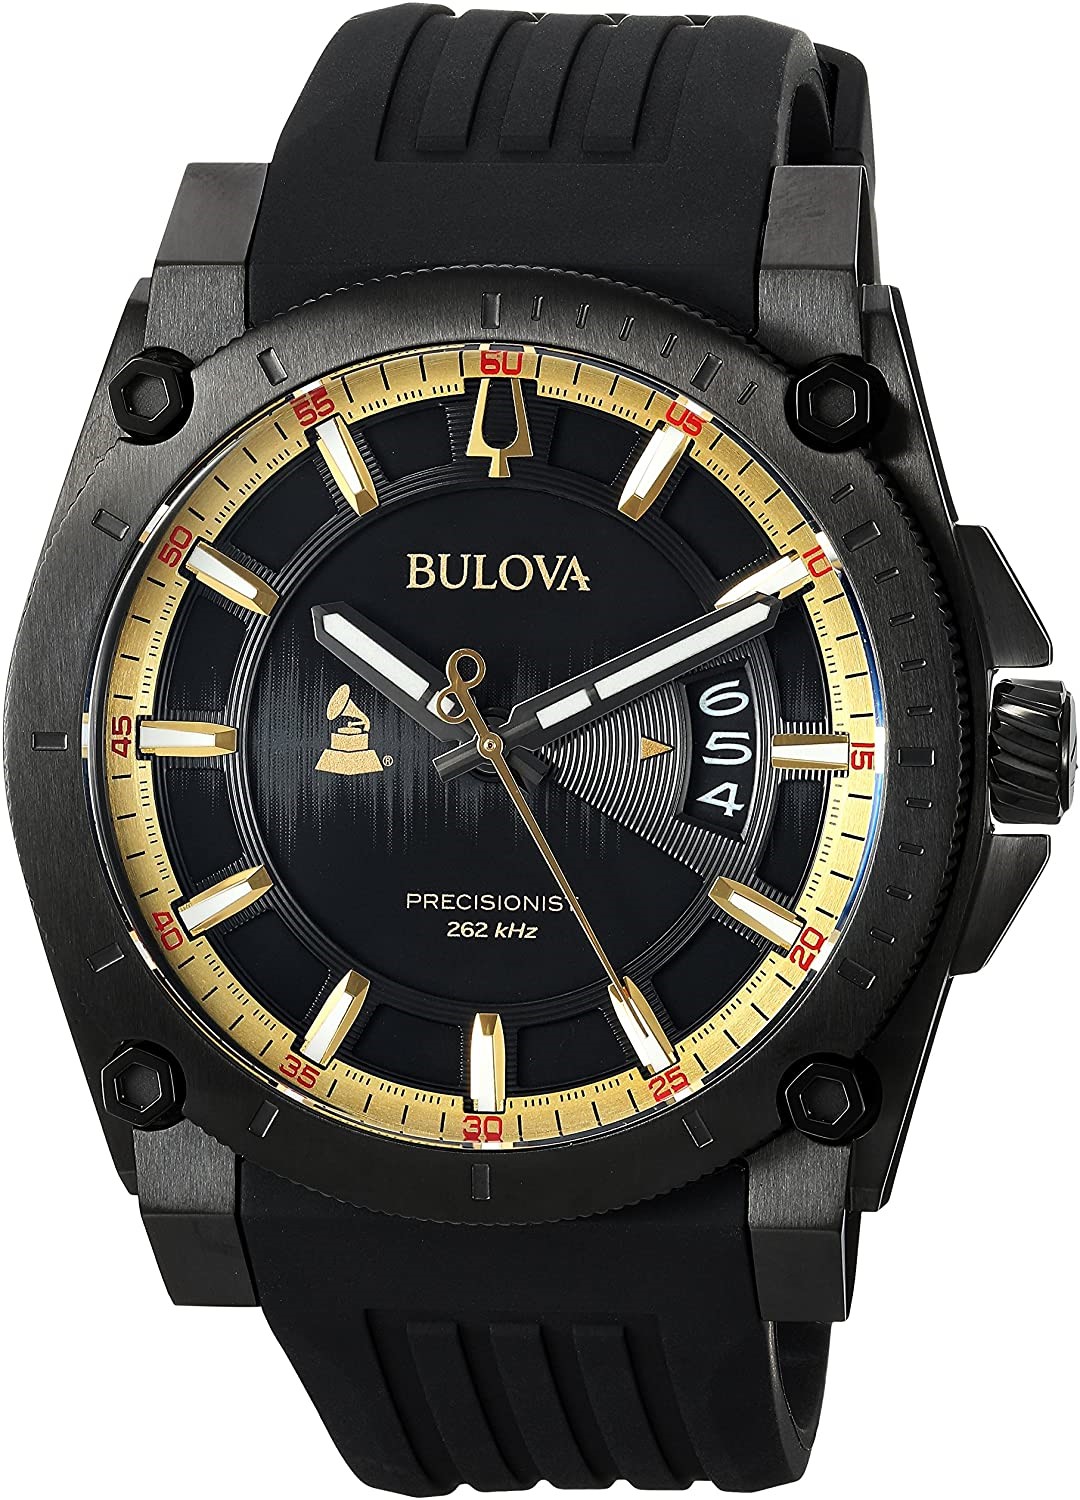 Bulova Men's Grammy Watch Stainless Steel Analog-Quartz Silicone Strap, Black, 24 (Model: 98B294)